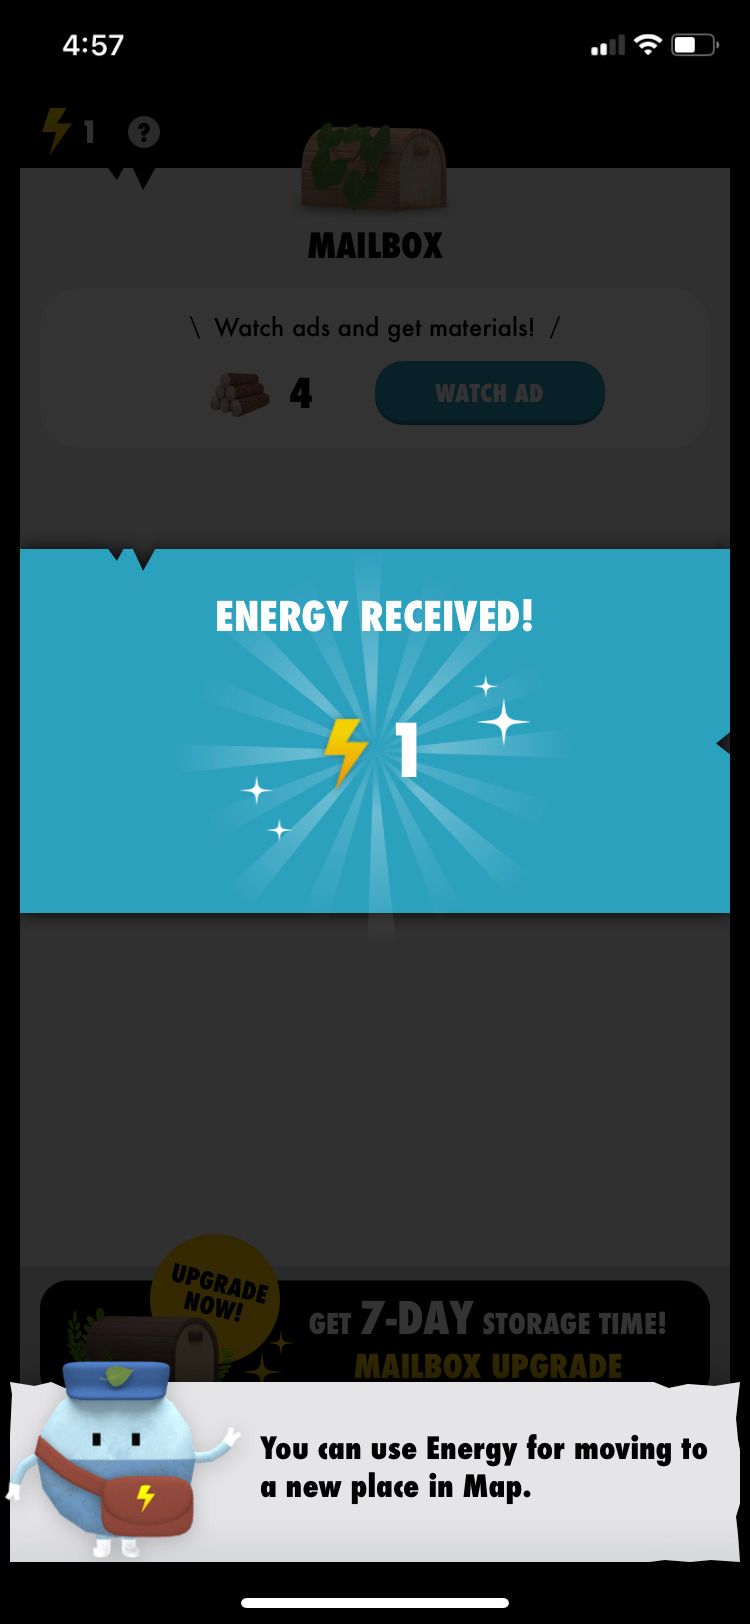 Hops app energy received screen